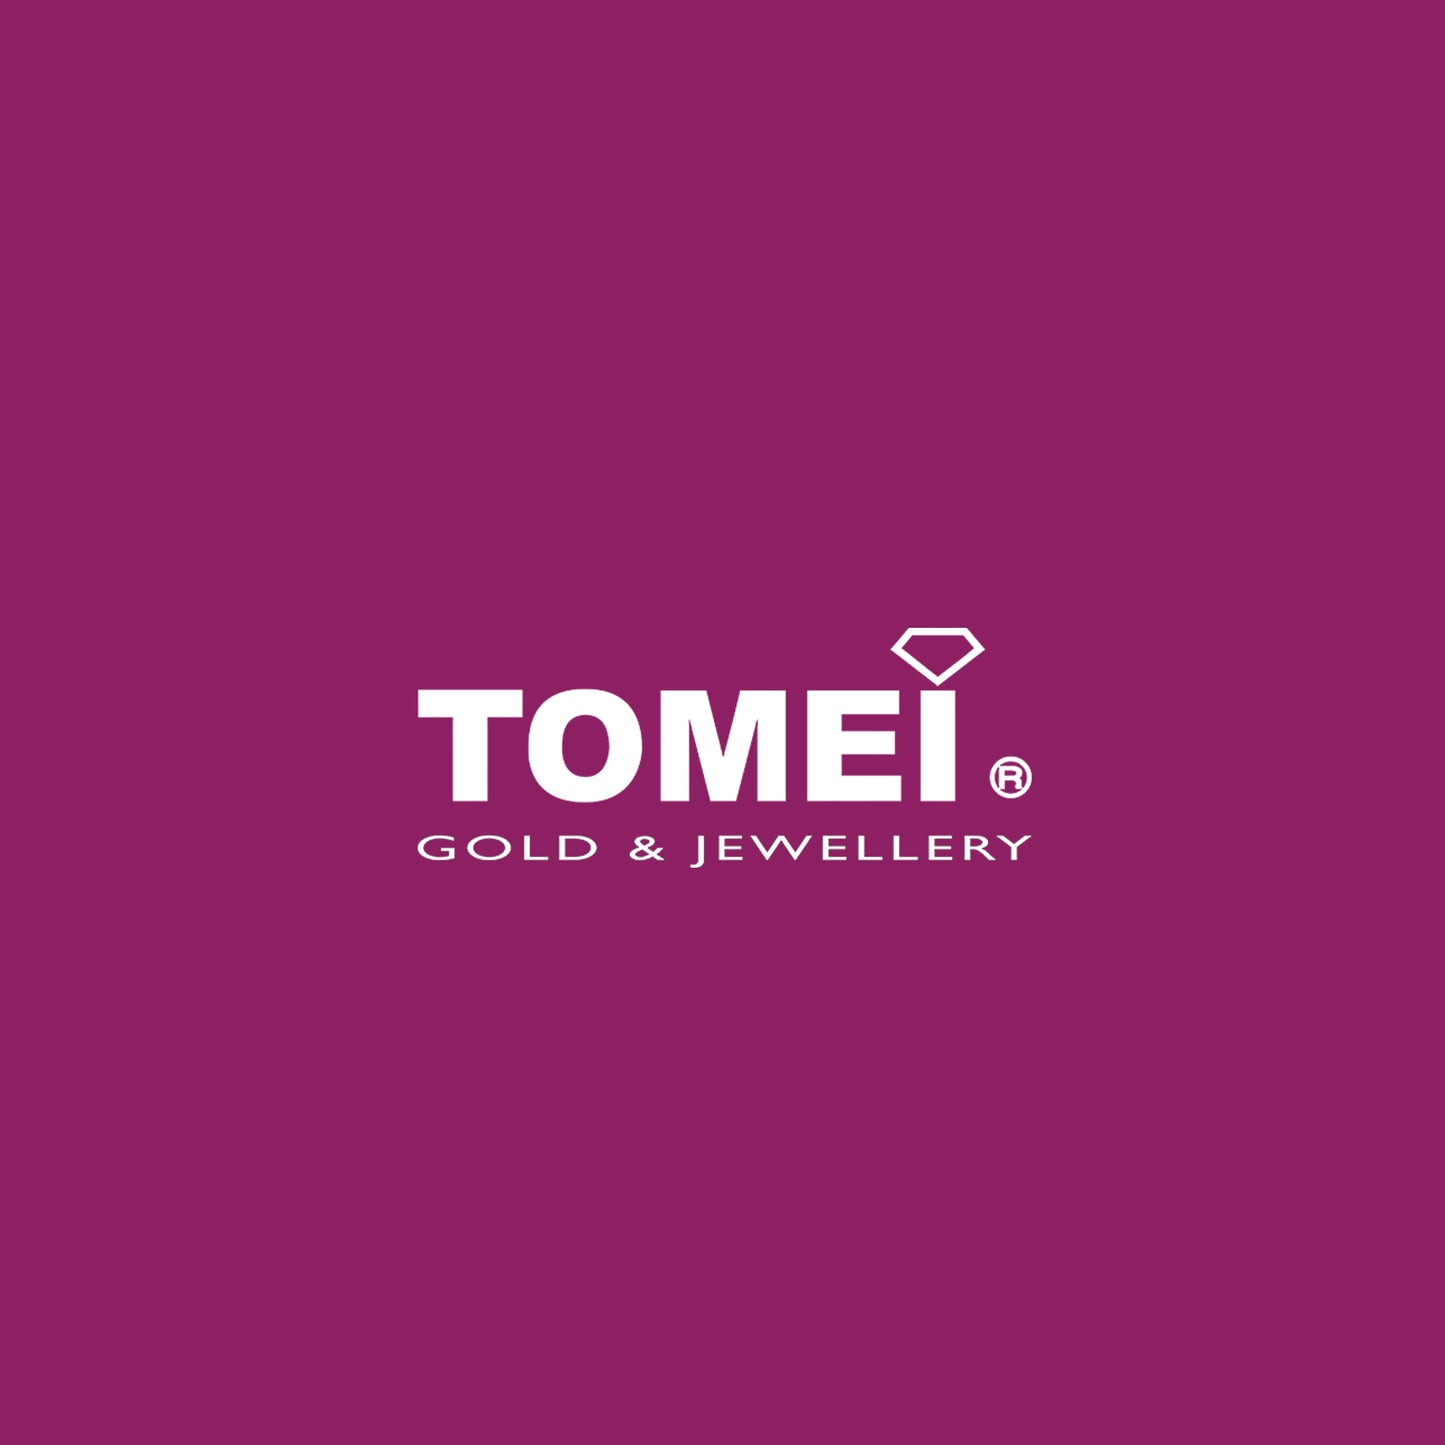 TOMEI Blue Clover Earrings, Sapphire Diamond White Gold 750 (E1909)